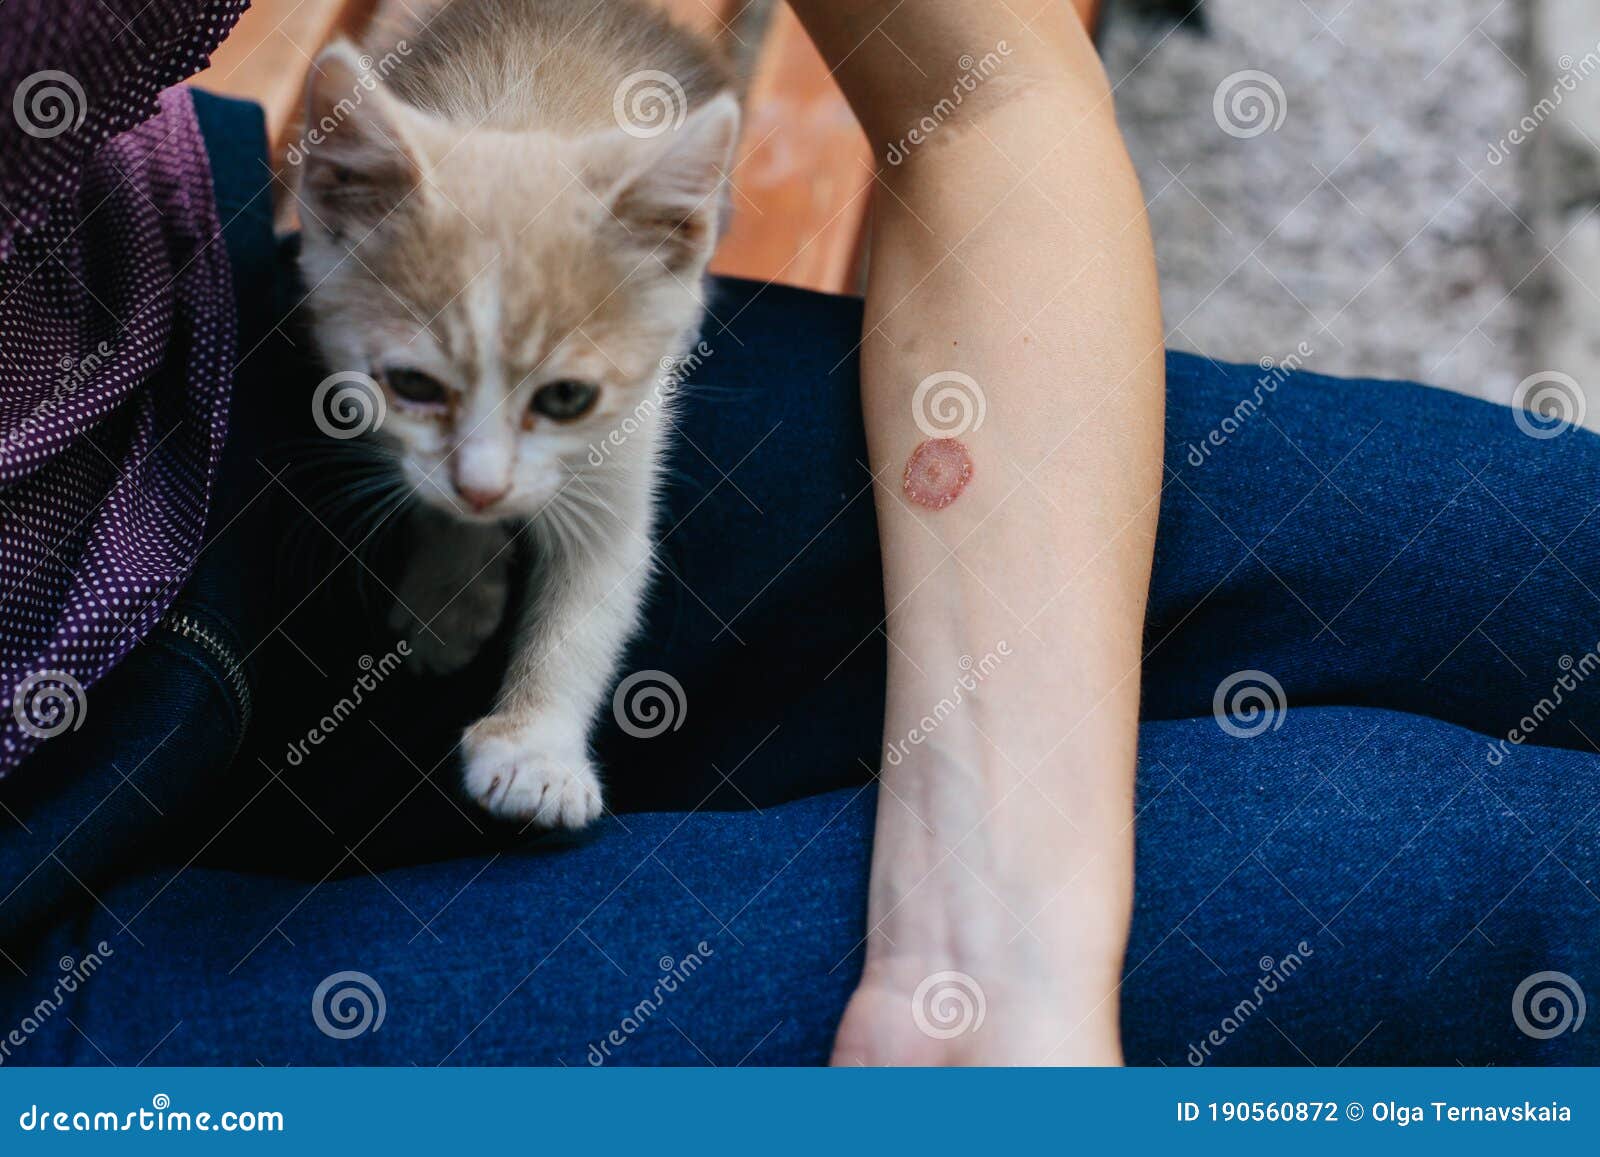 ringworm arm hand cat disease skin problem ringworm arm hand cat disease 190560872